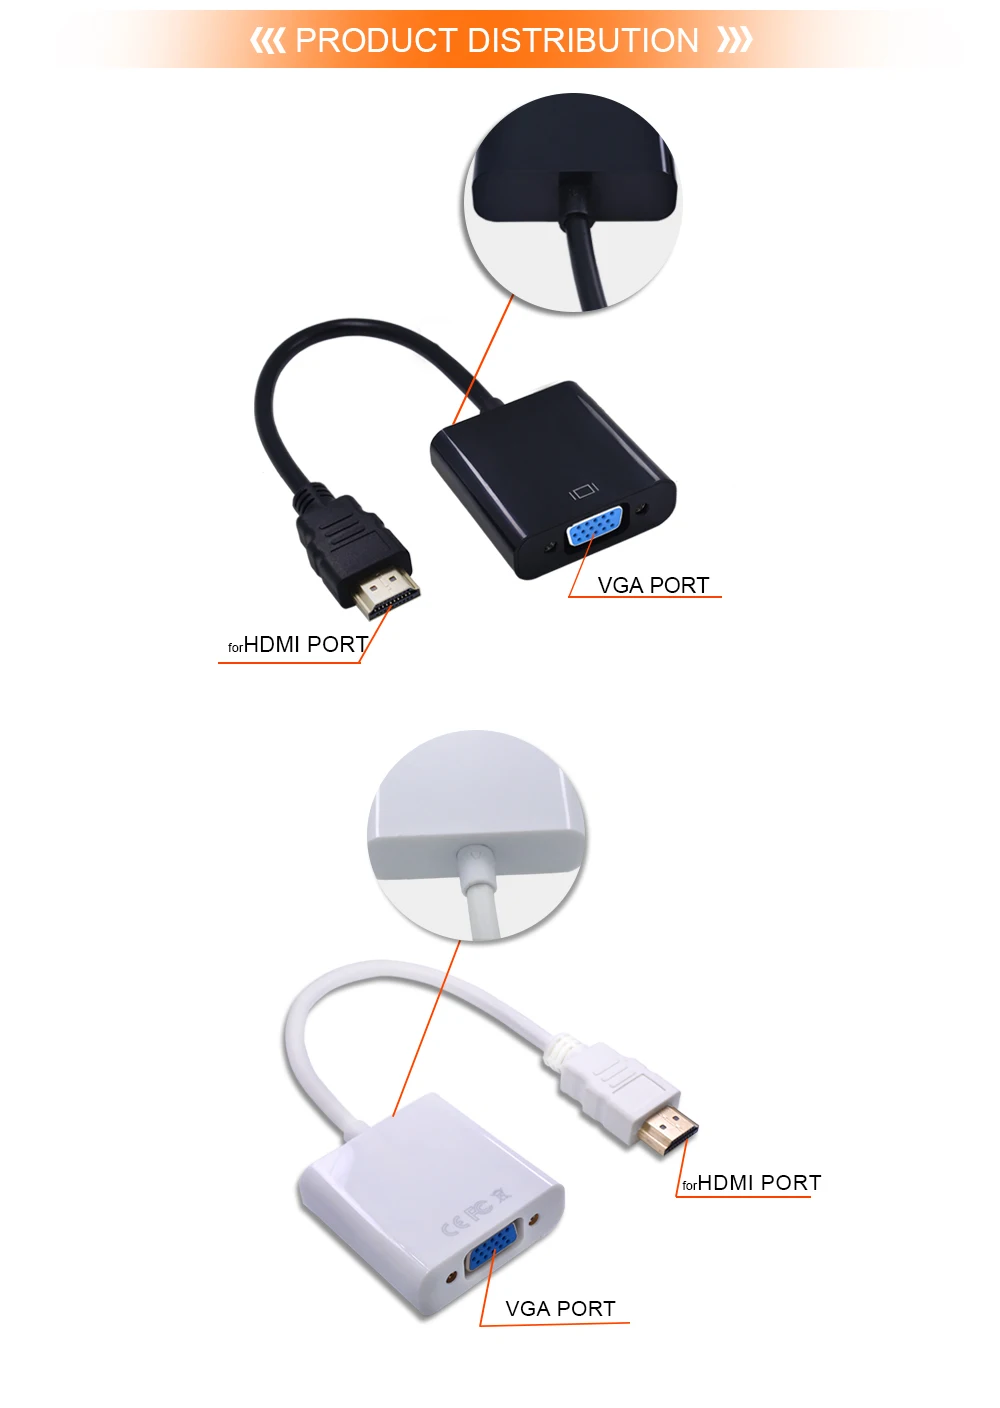 TISHRIC для hdmi-vga кабель папа-мама адаптер видео конвертер 1080P цифро-аналоговый HDMI2VGA для ноутбука/ПК